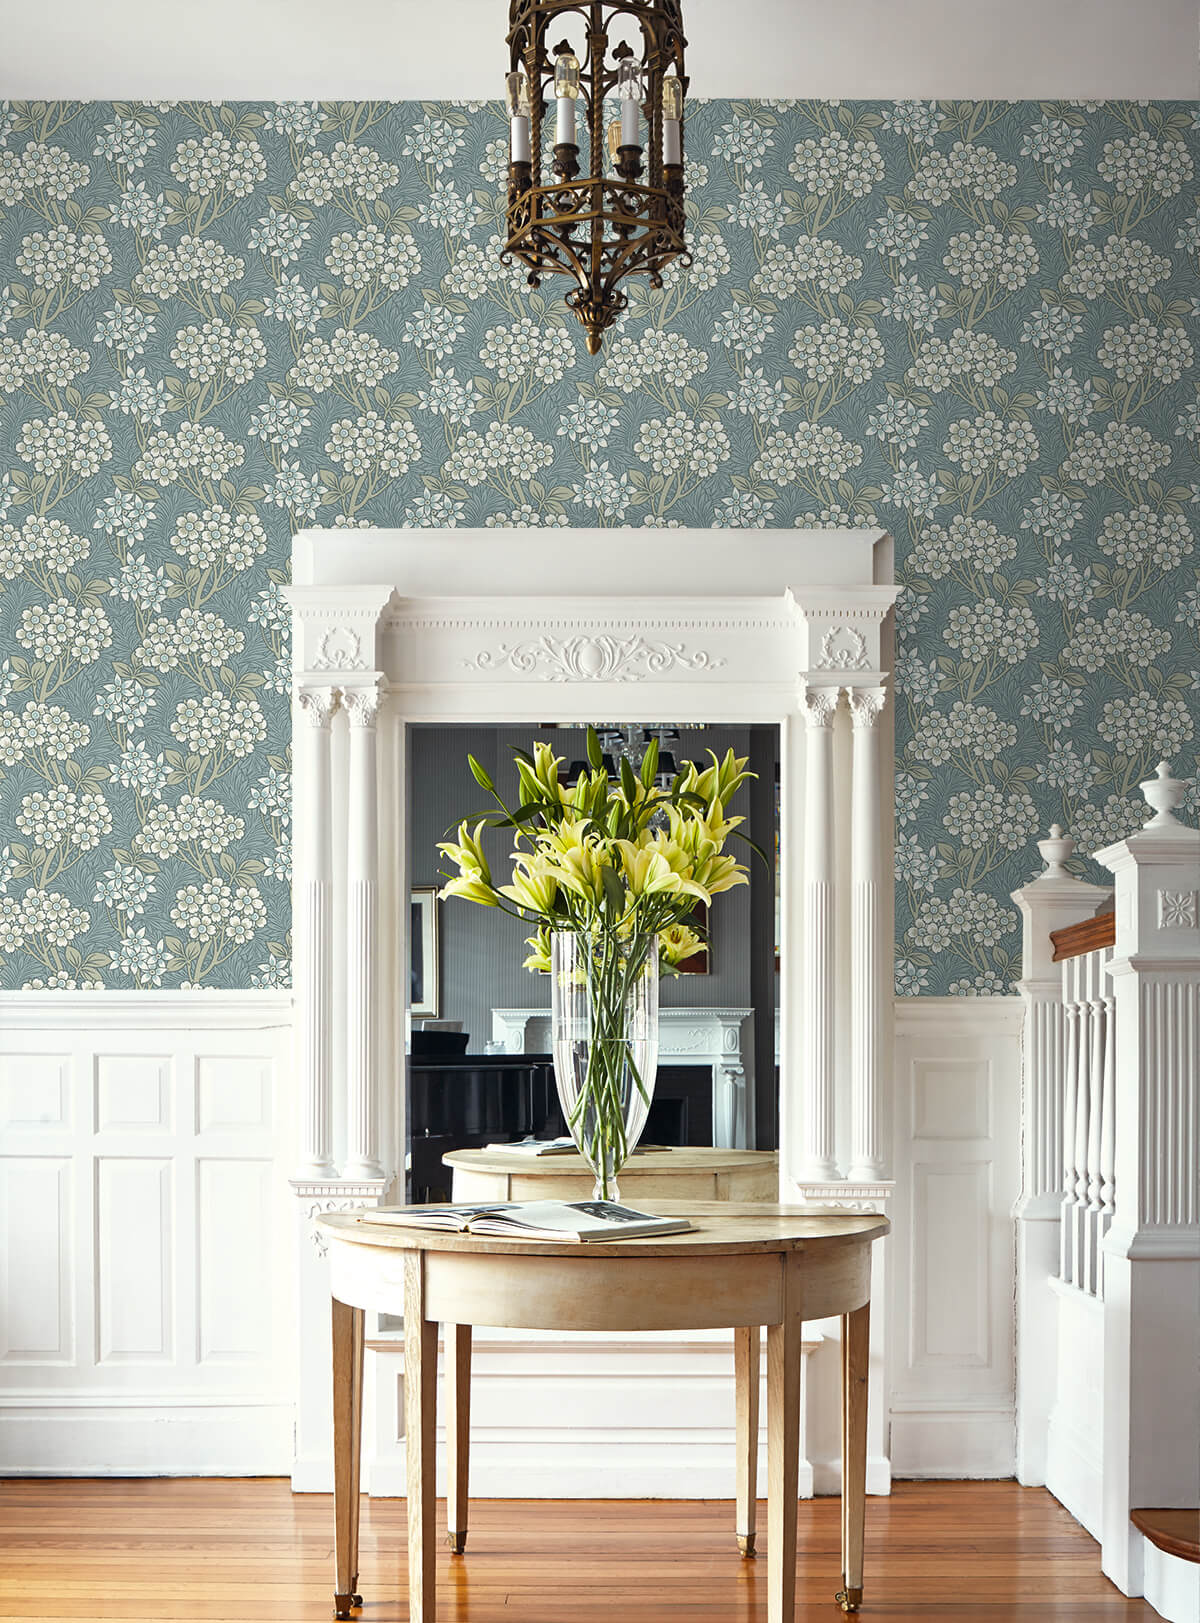 Seabrook Legacy Prints Floral Vine Wallpaper - Stream Blue & Sage